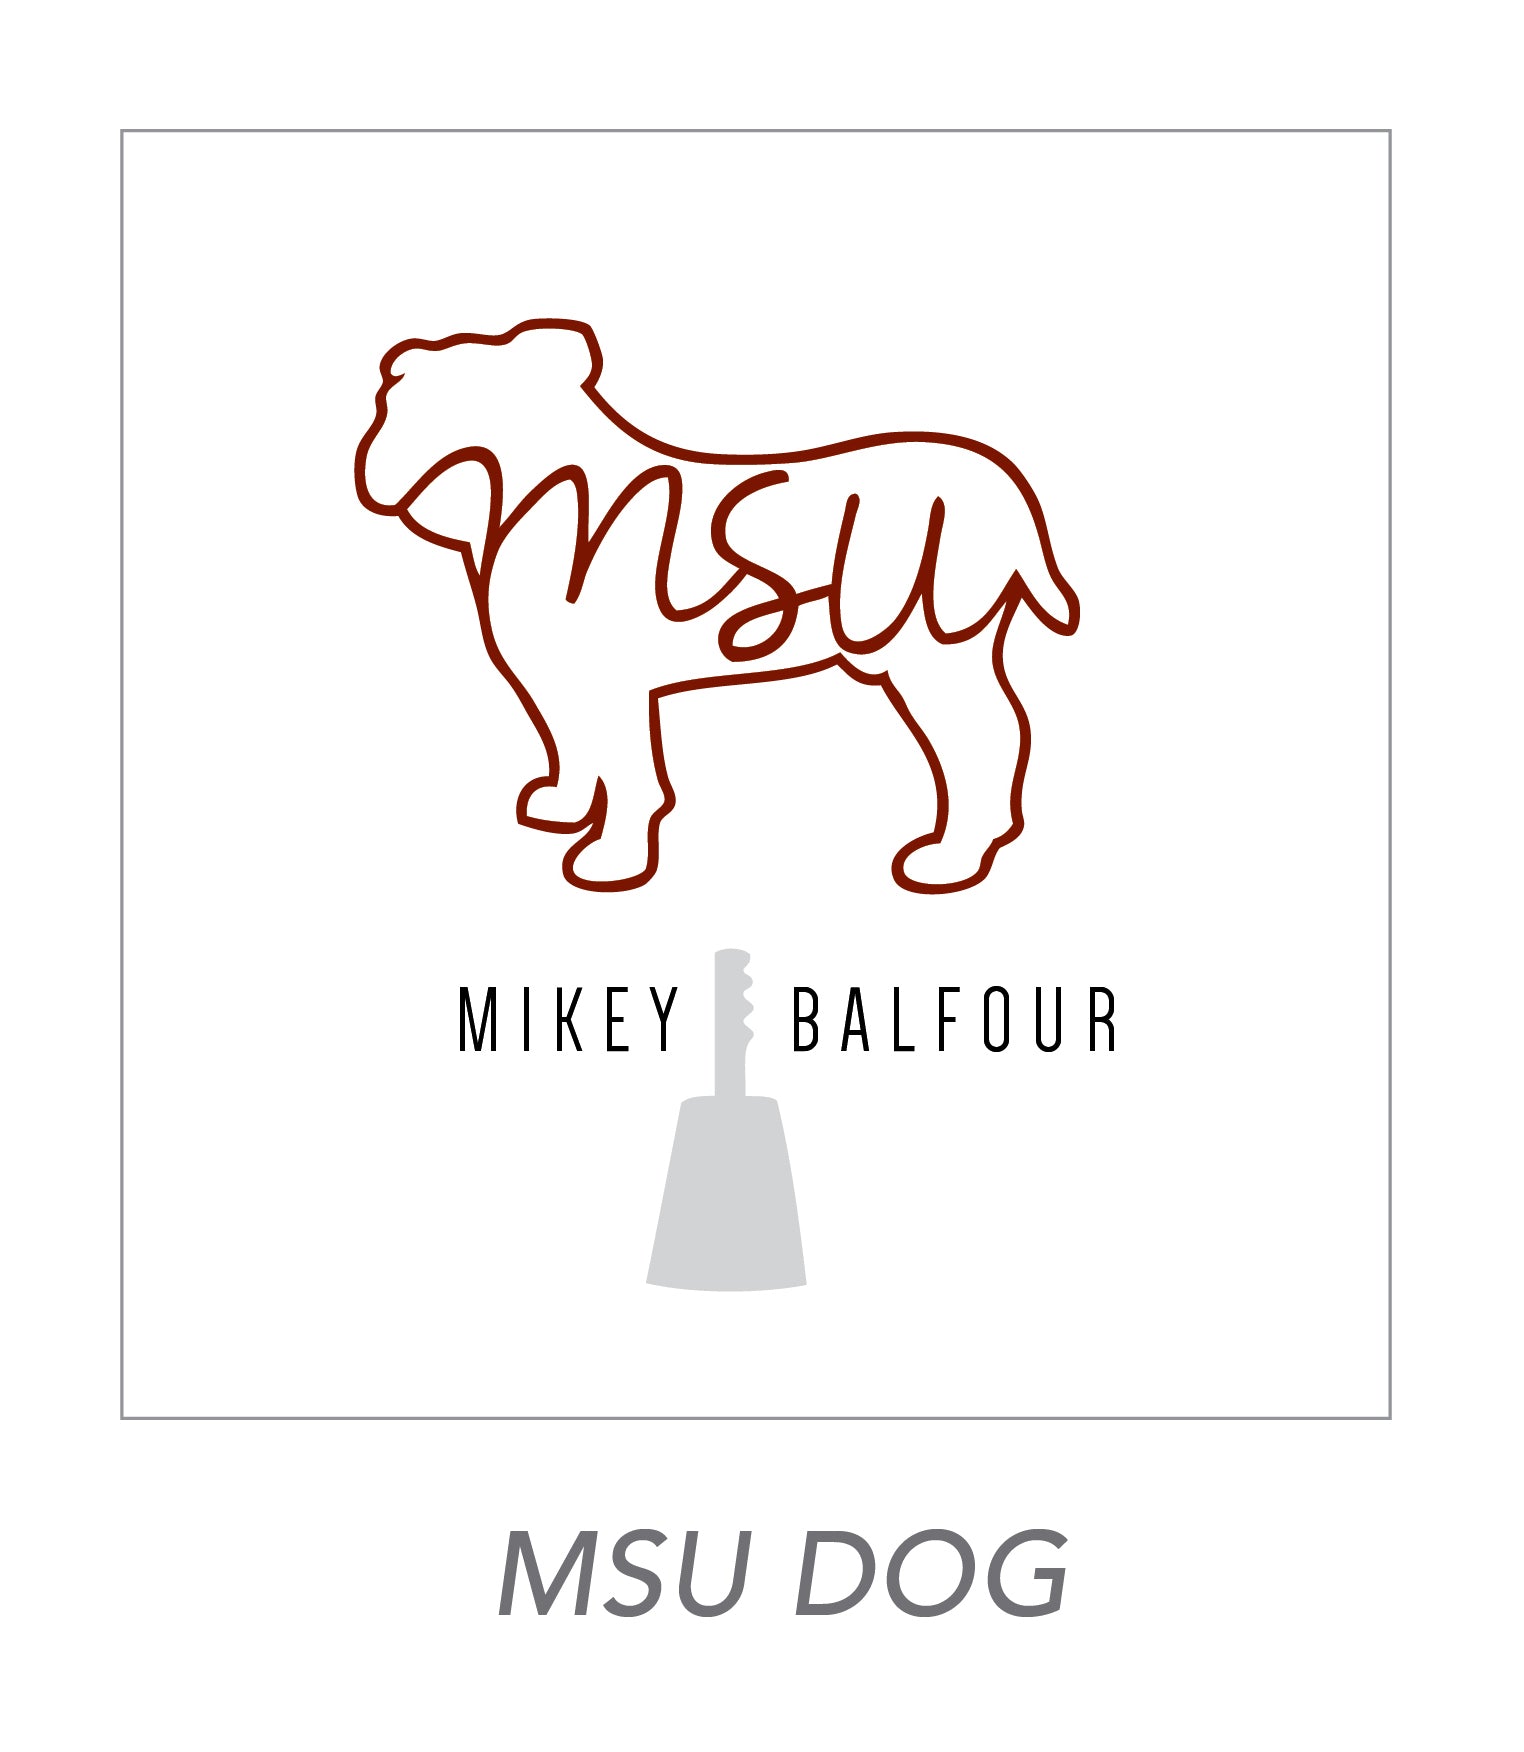 boy stickers (MSU DOG)